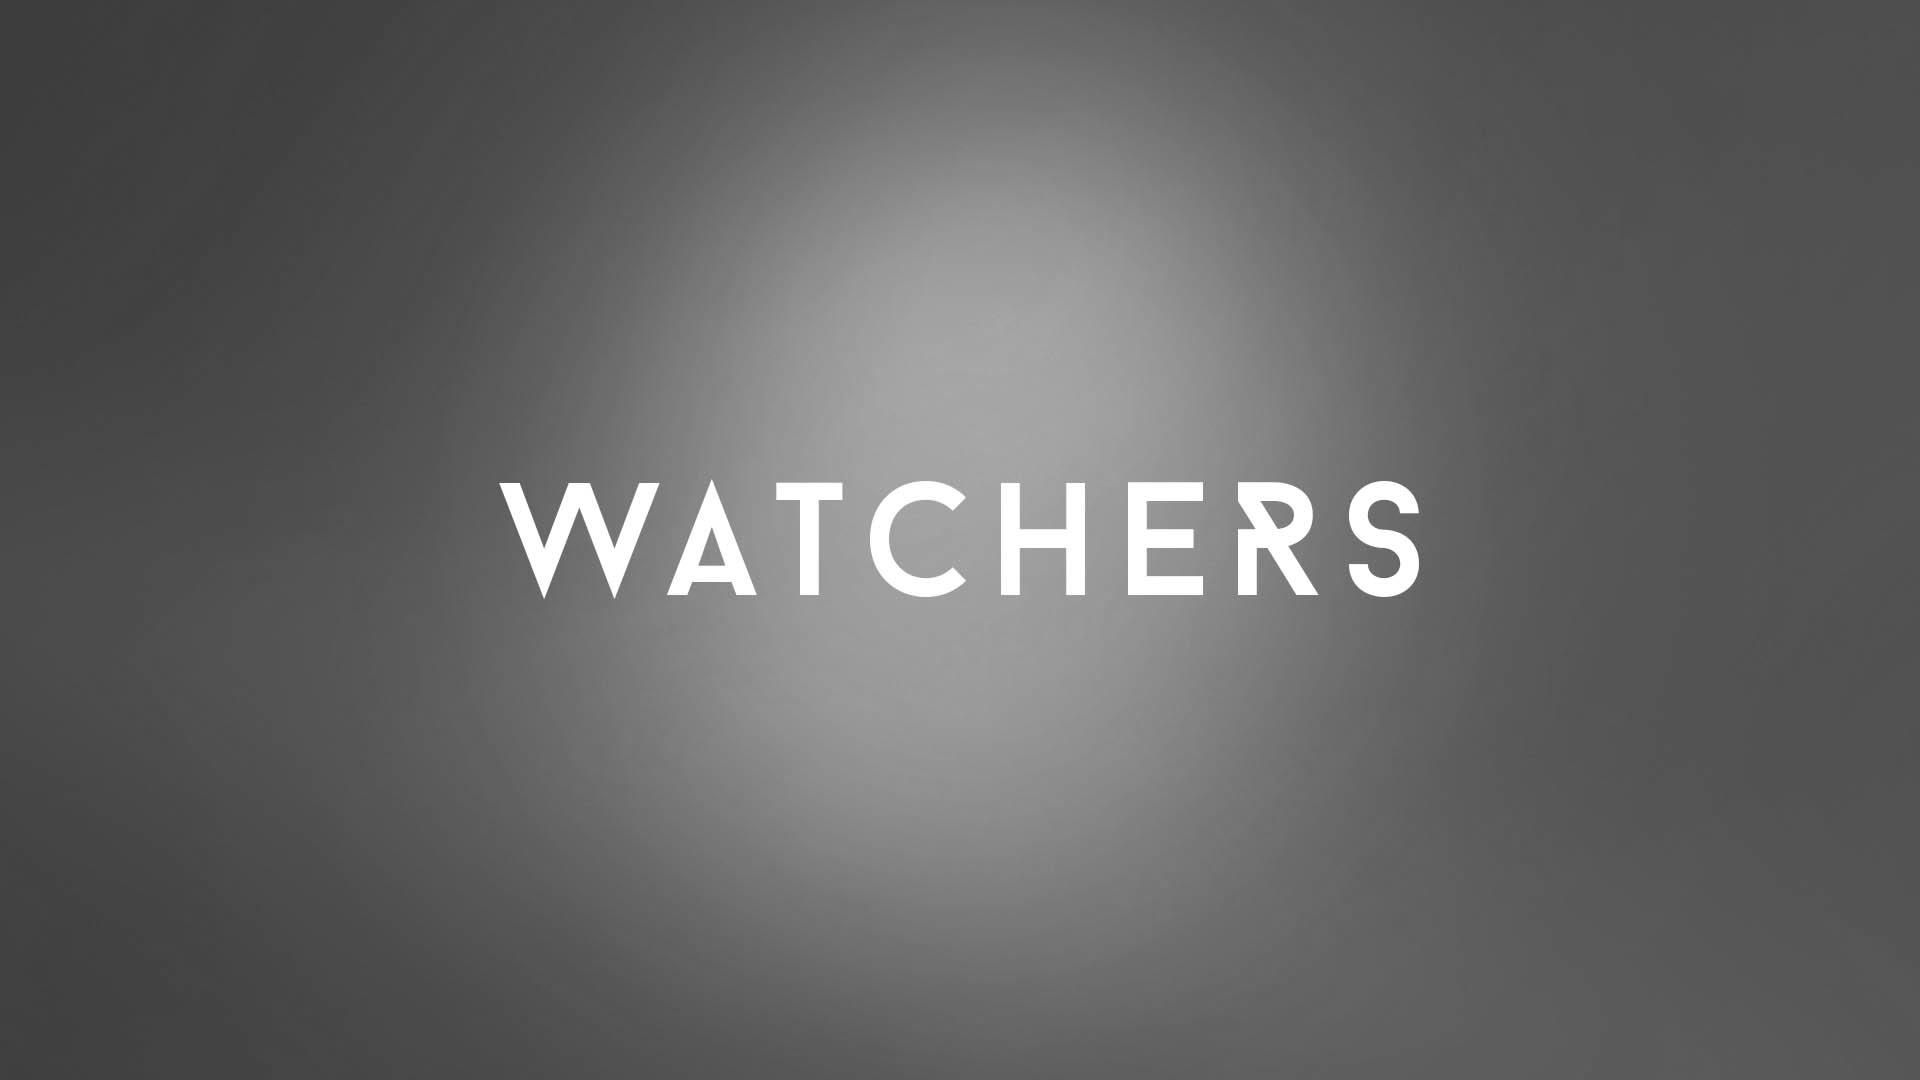 WATCHERS